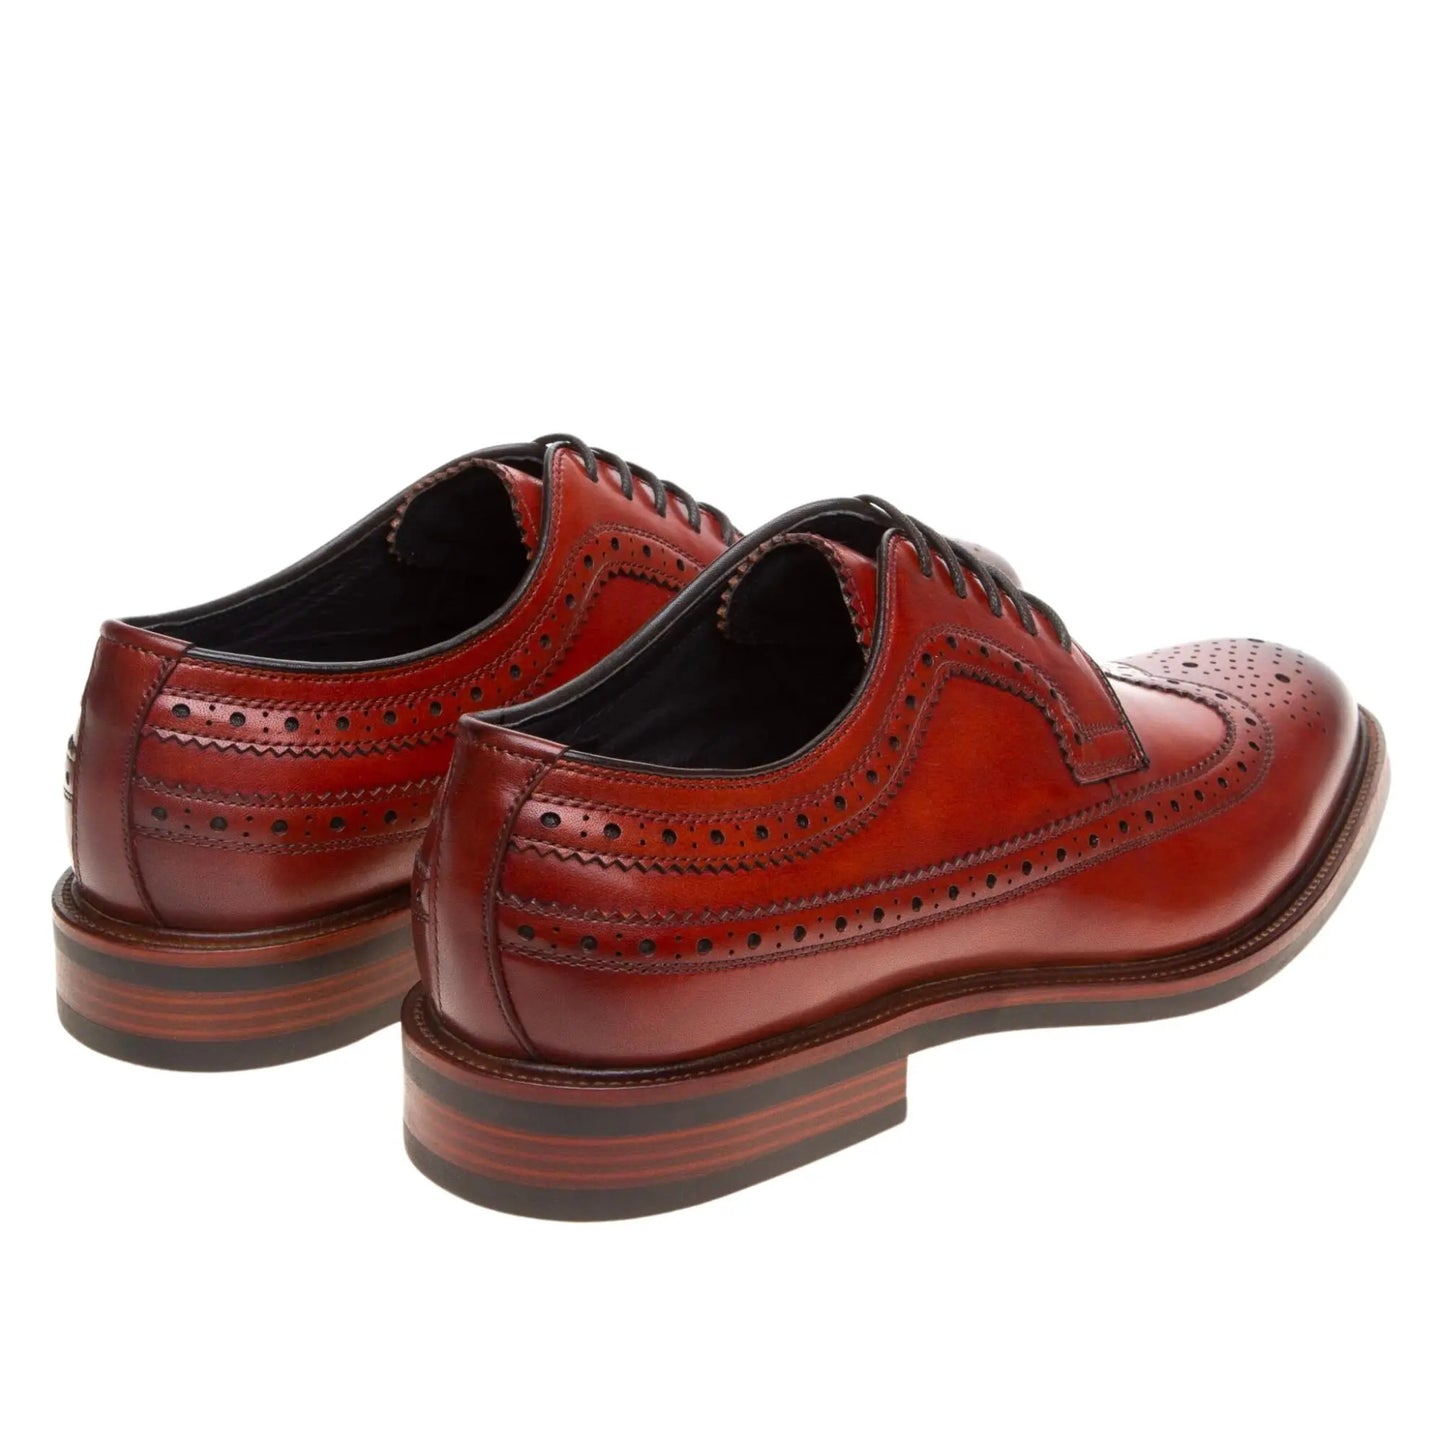 Buy John White Hogarth Reef Brogue - Brown | Brogue Shoess at Woven Durham